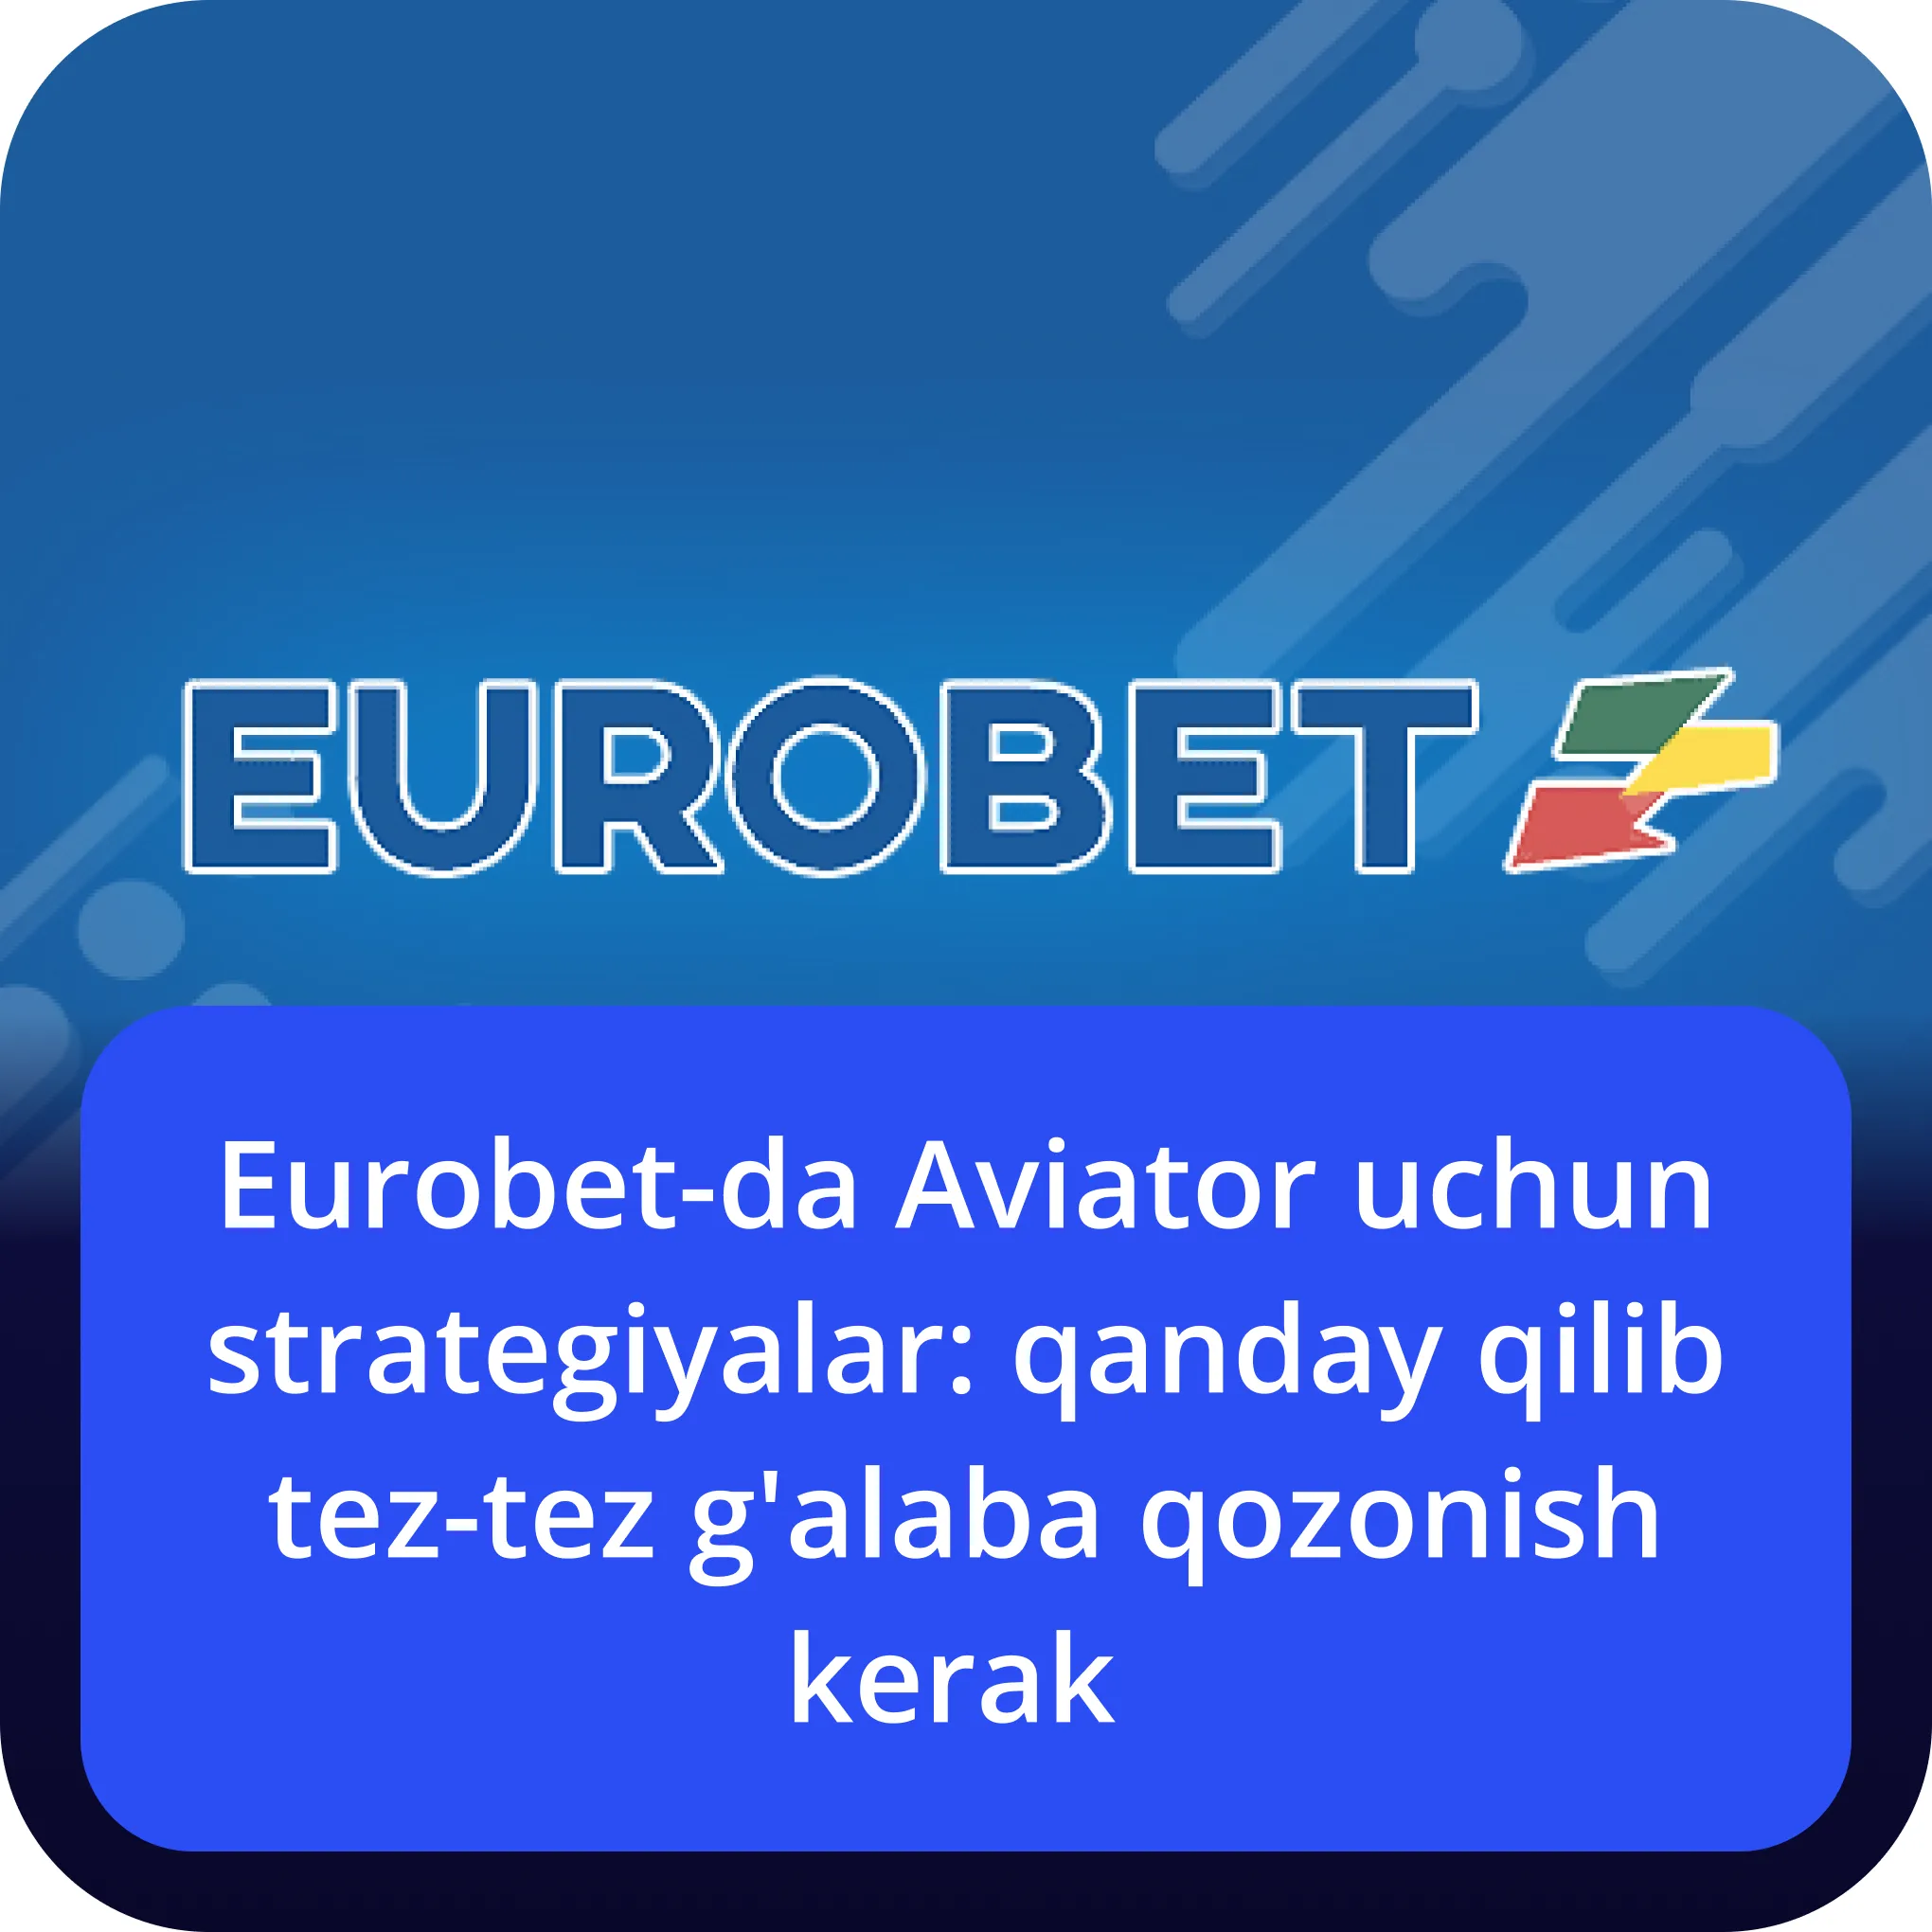 eurobet aviator strategiyalar